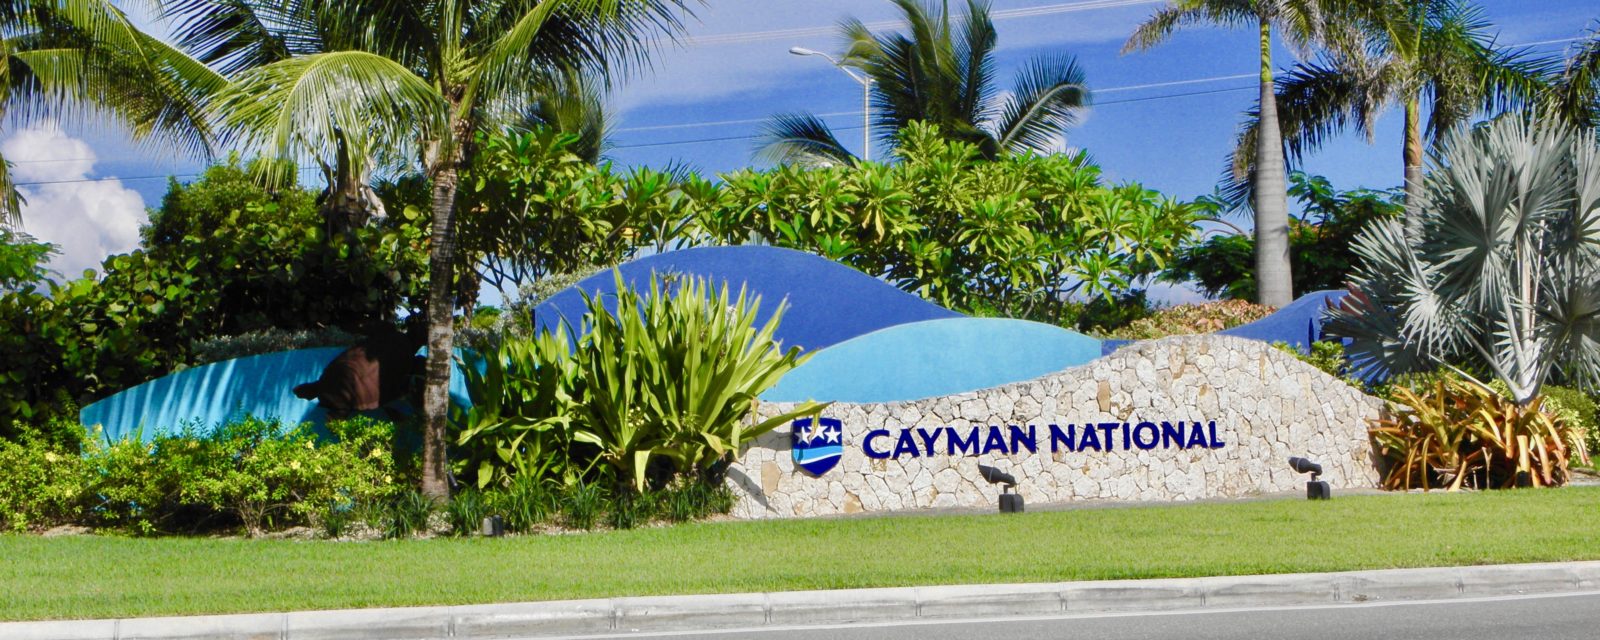 Cayman National Roundabout